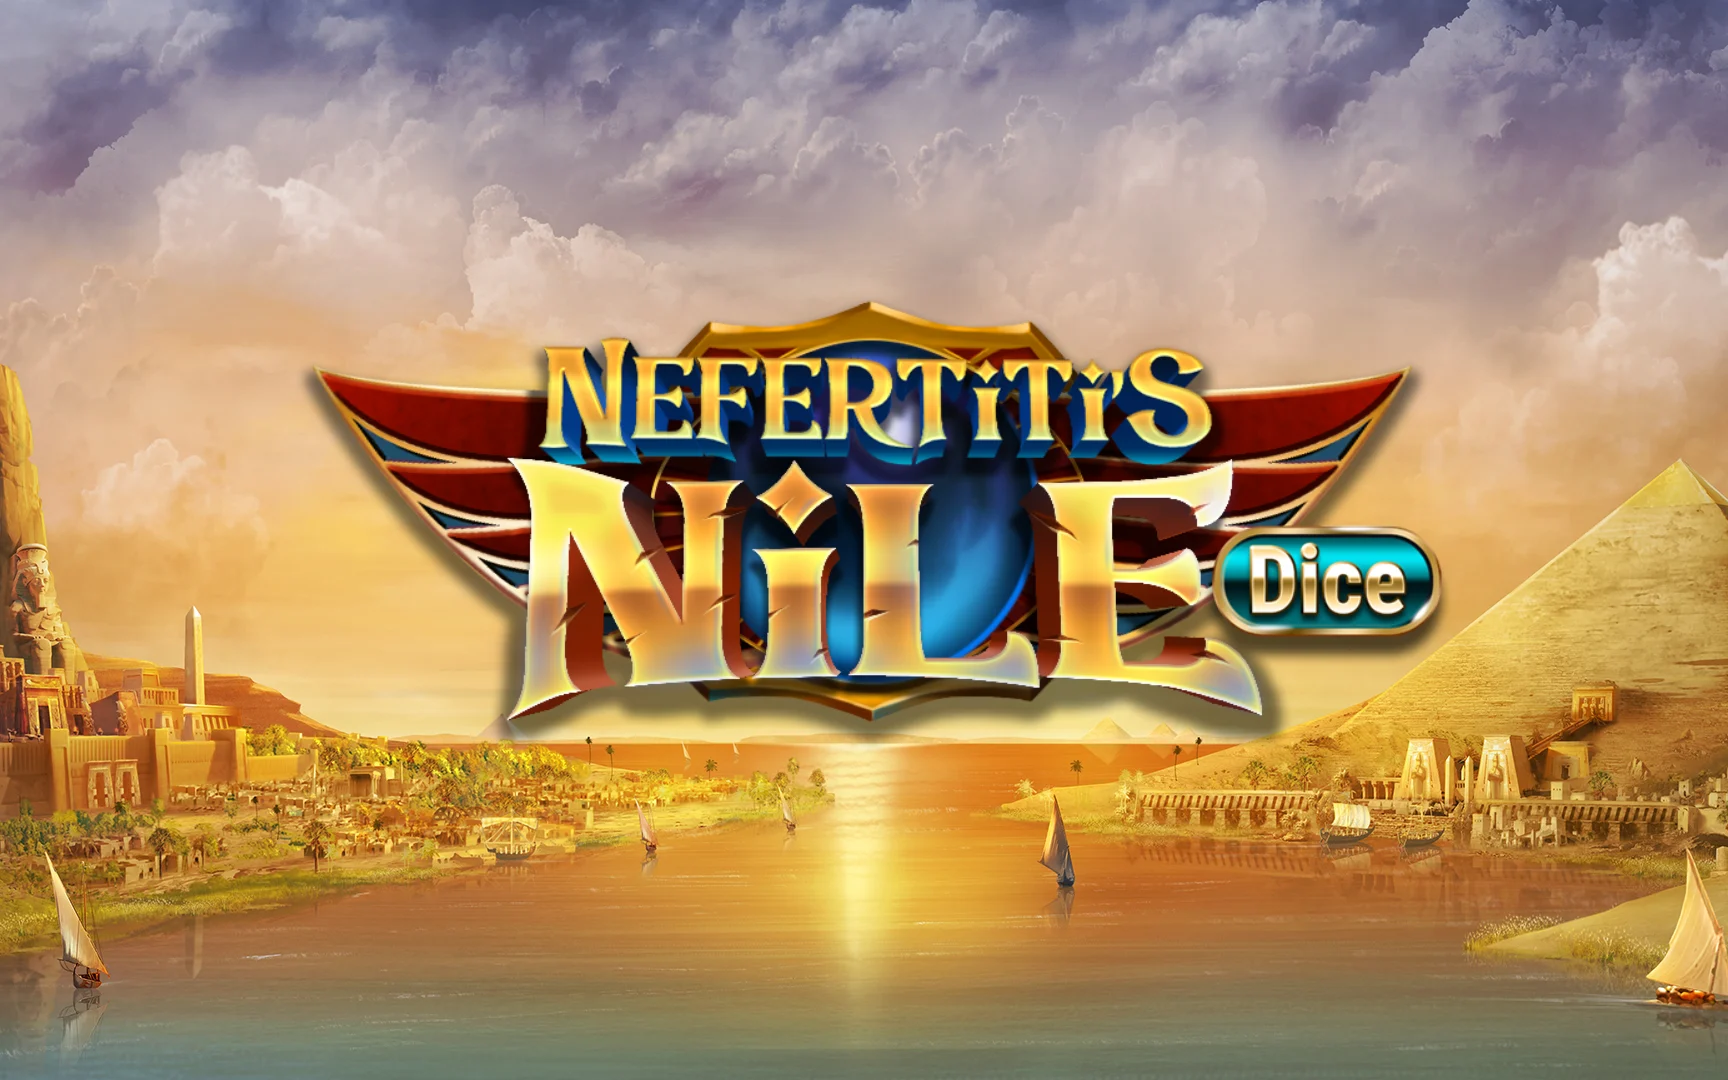 Juega a Nefertiti's Nile Dice en el casino en línea de Starcasino.be